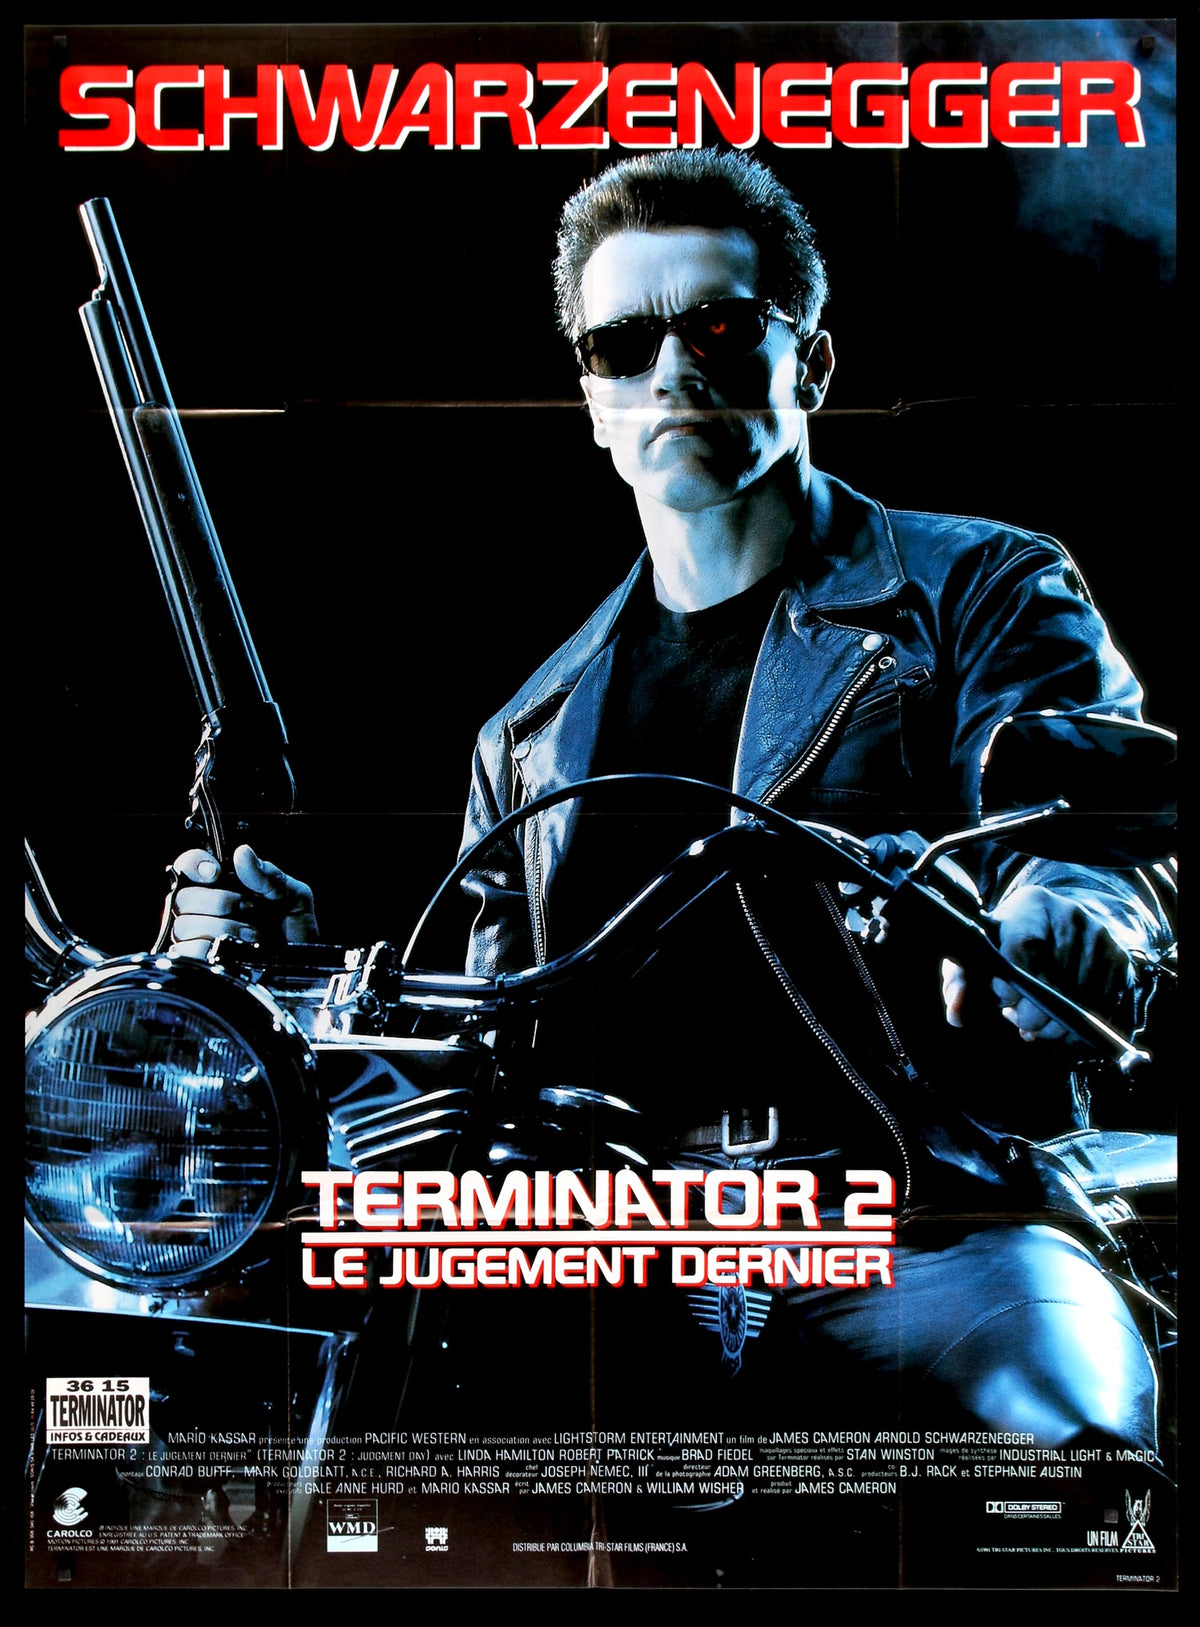 Terminator 2: Judgment Day (1991) original movie poster for sale at Original Film Art